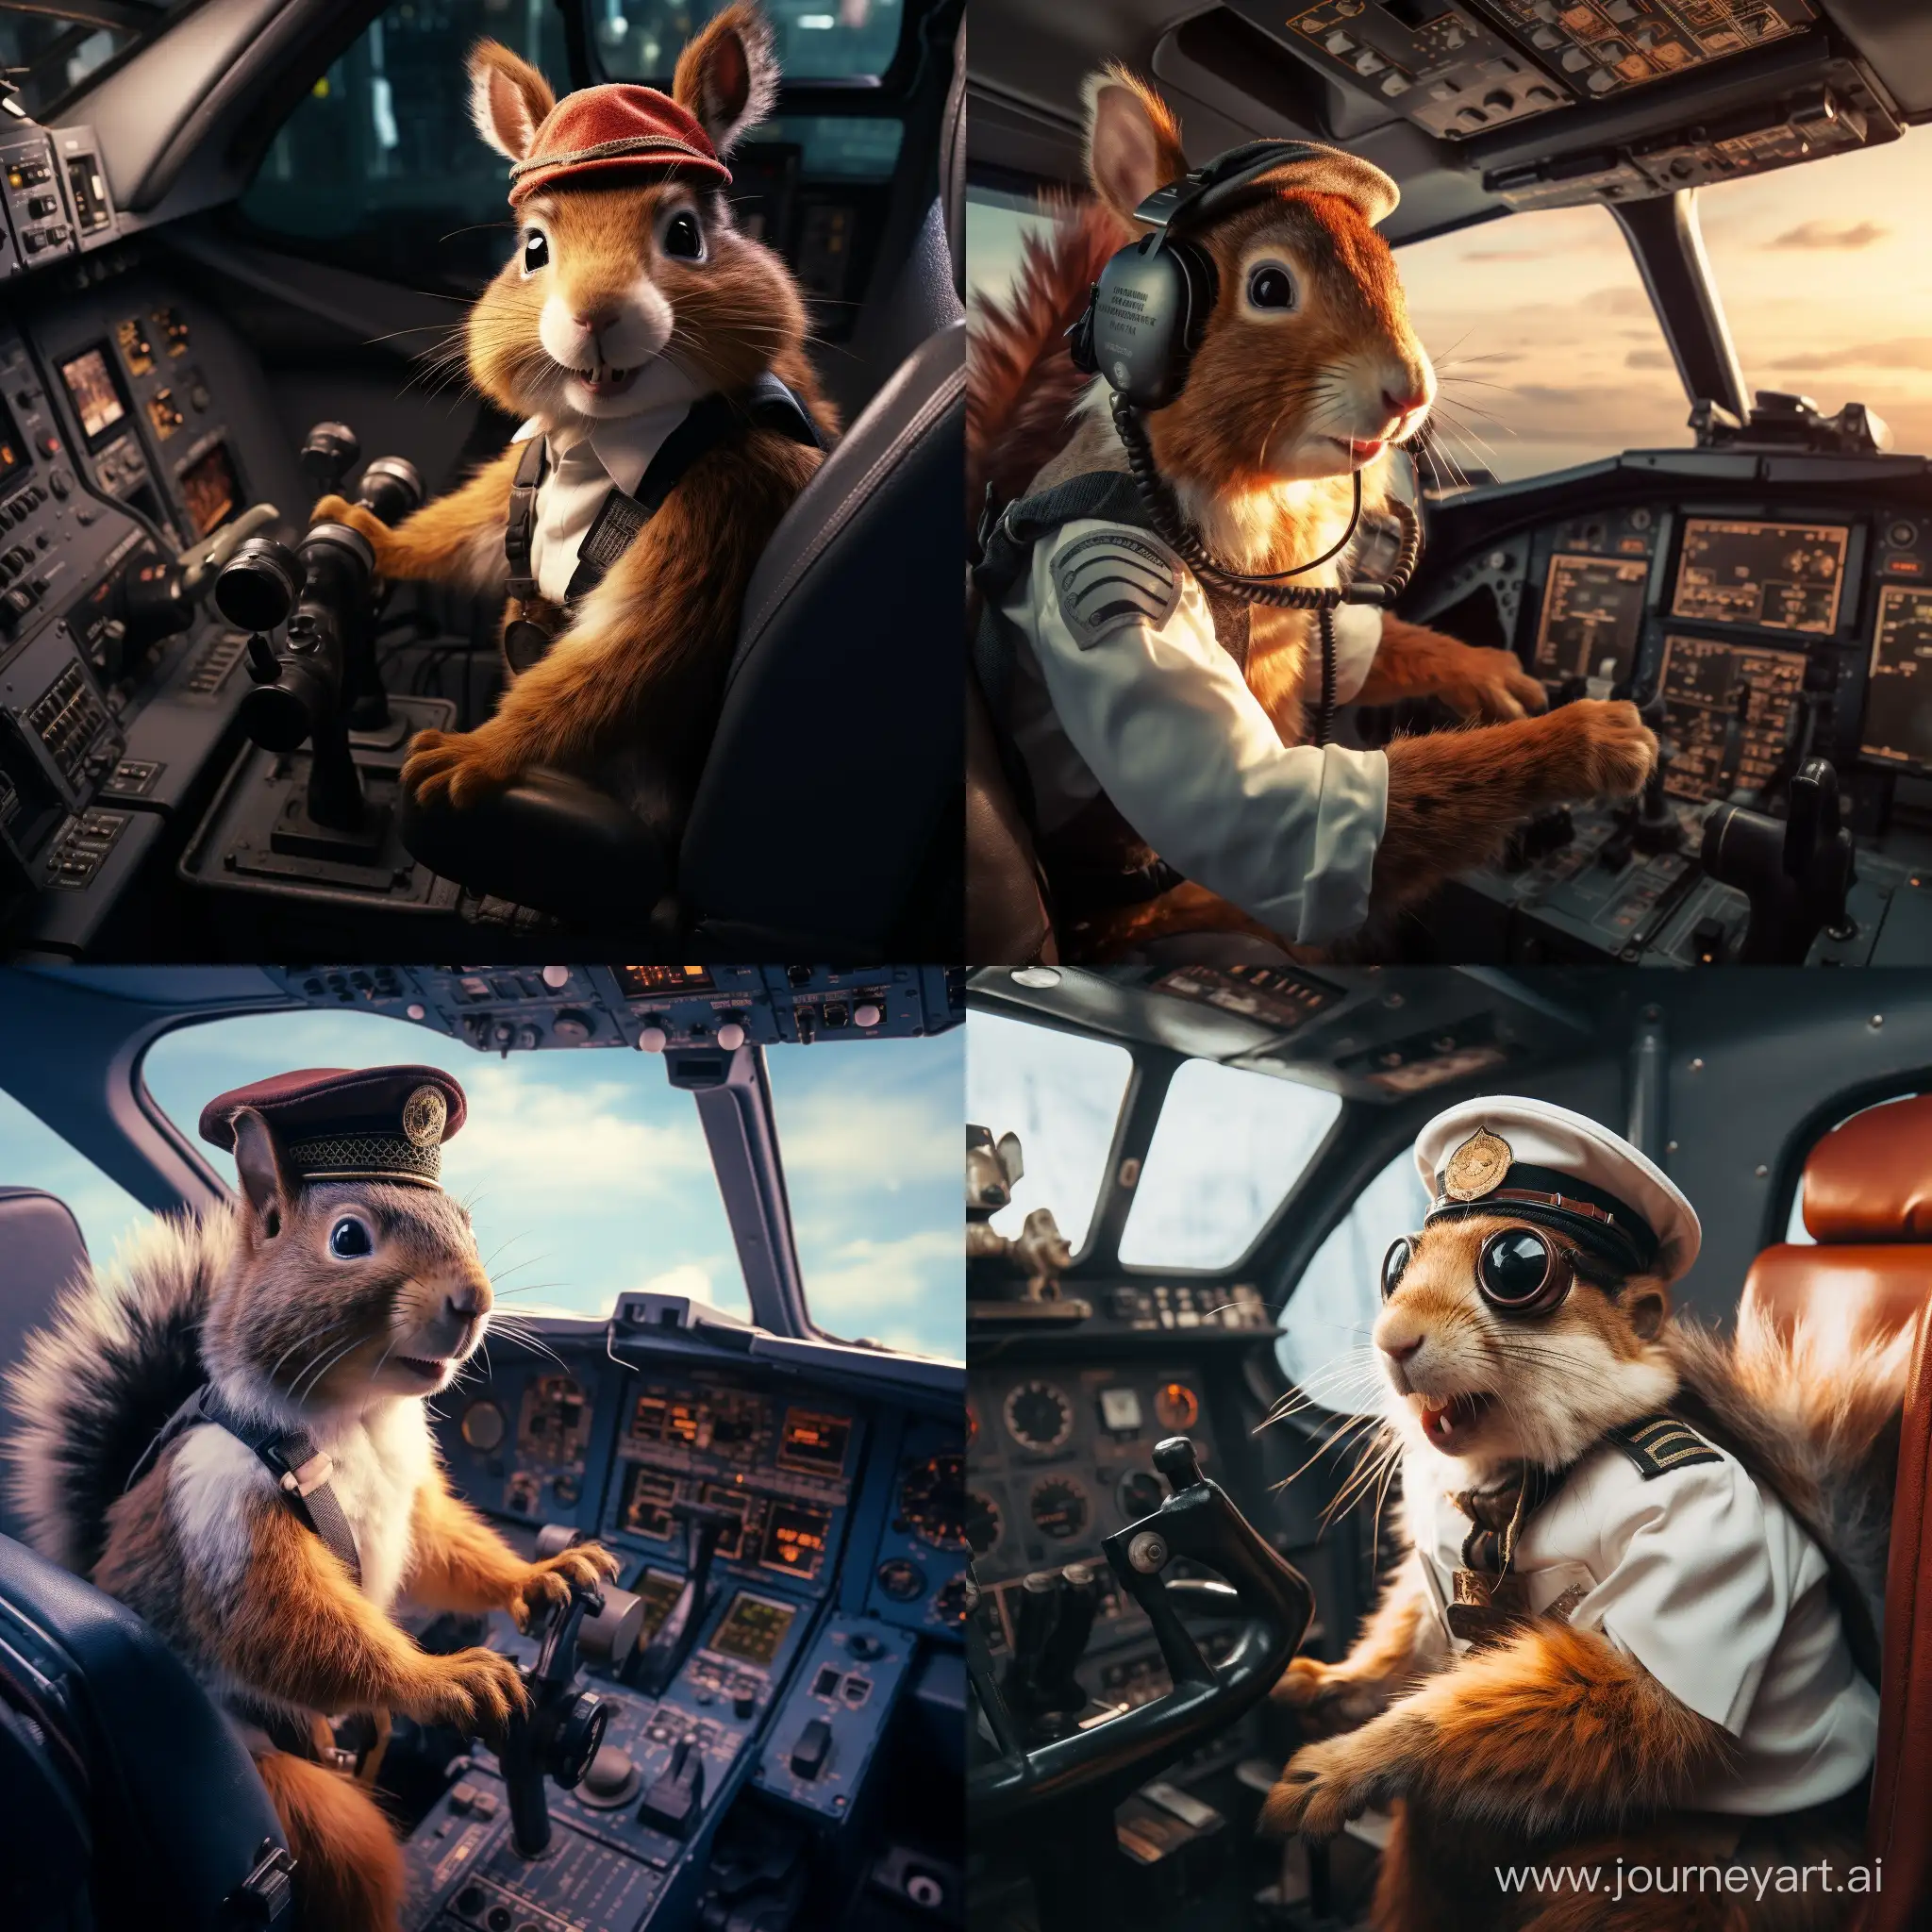 Adventurous-Squirrel-Piloting-a-Plane-in-the-Cockpit